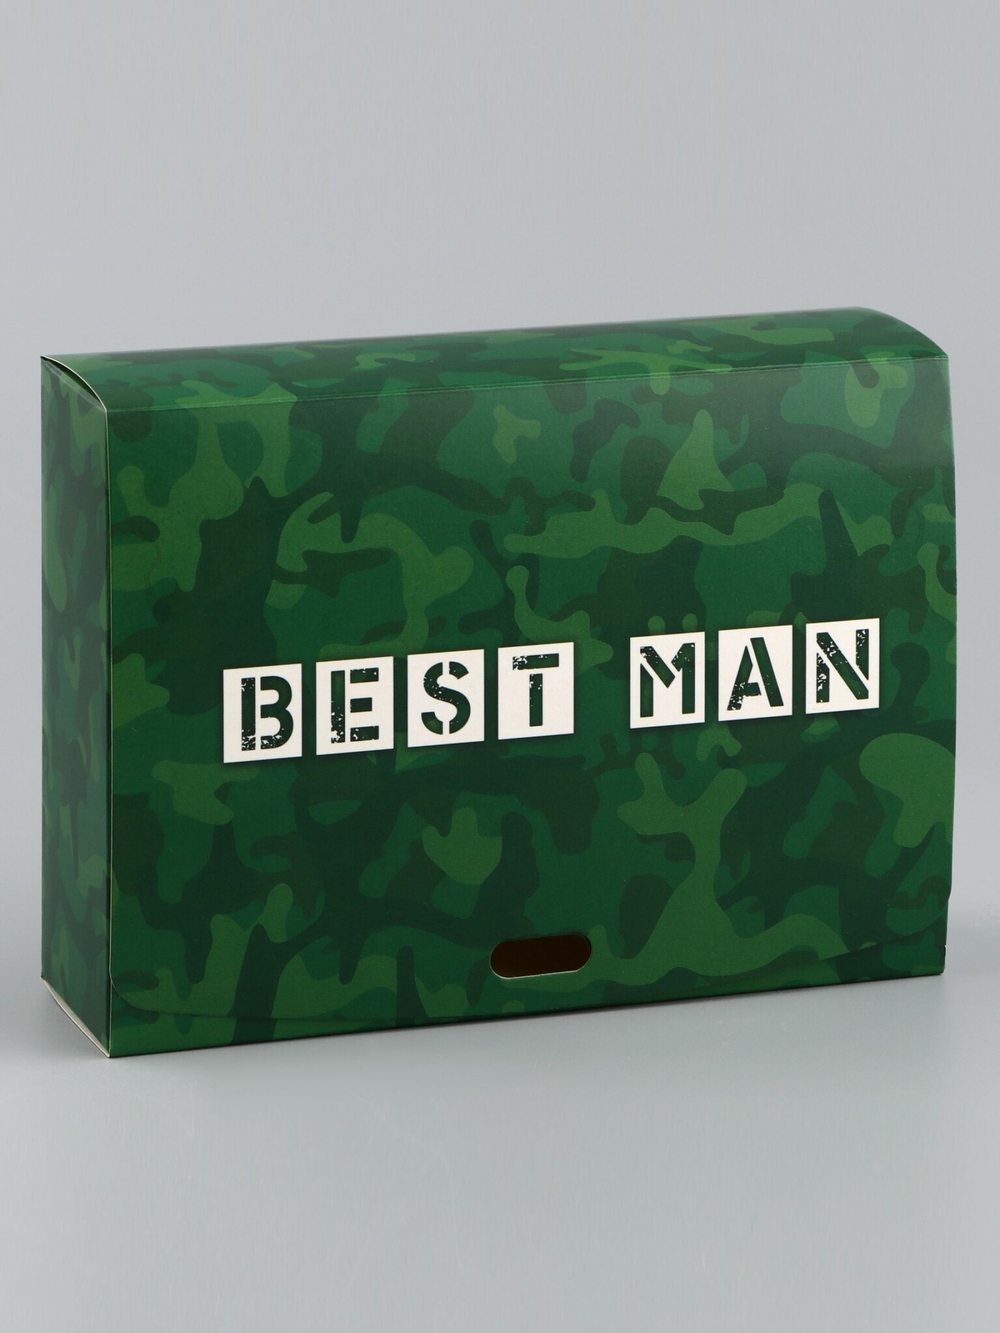 Коробка под подарок Best man, 12,5*16,5*5см